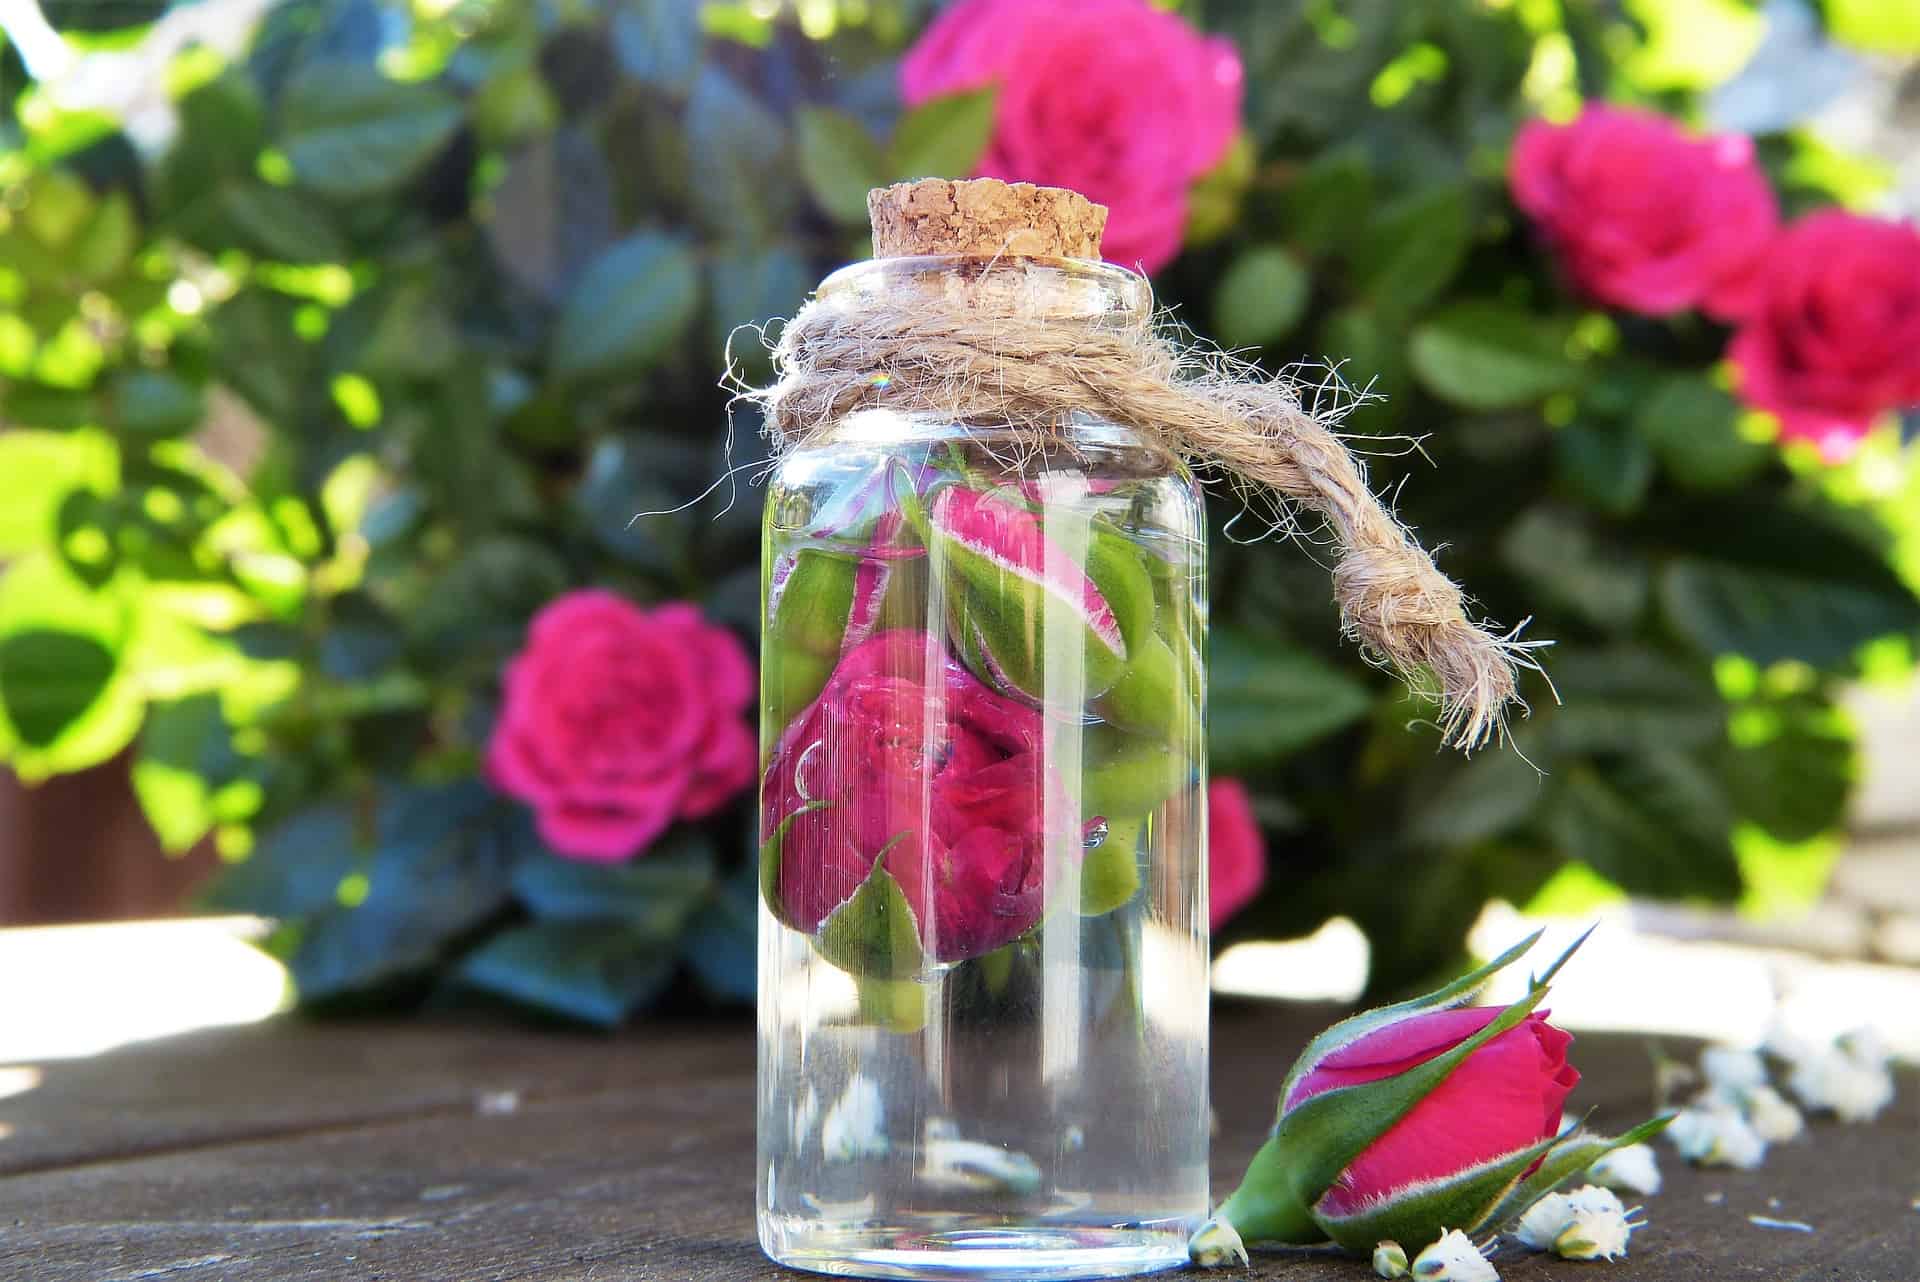 Beauty Experts Explain 4 Amazing Benefits Of Using Rose Water